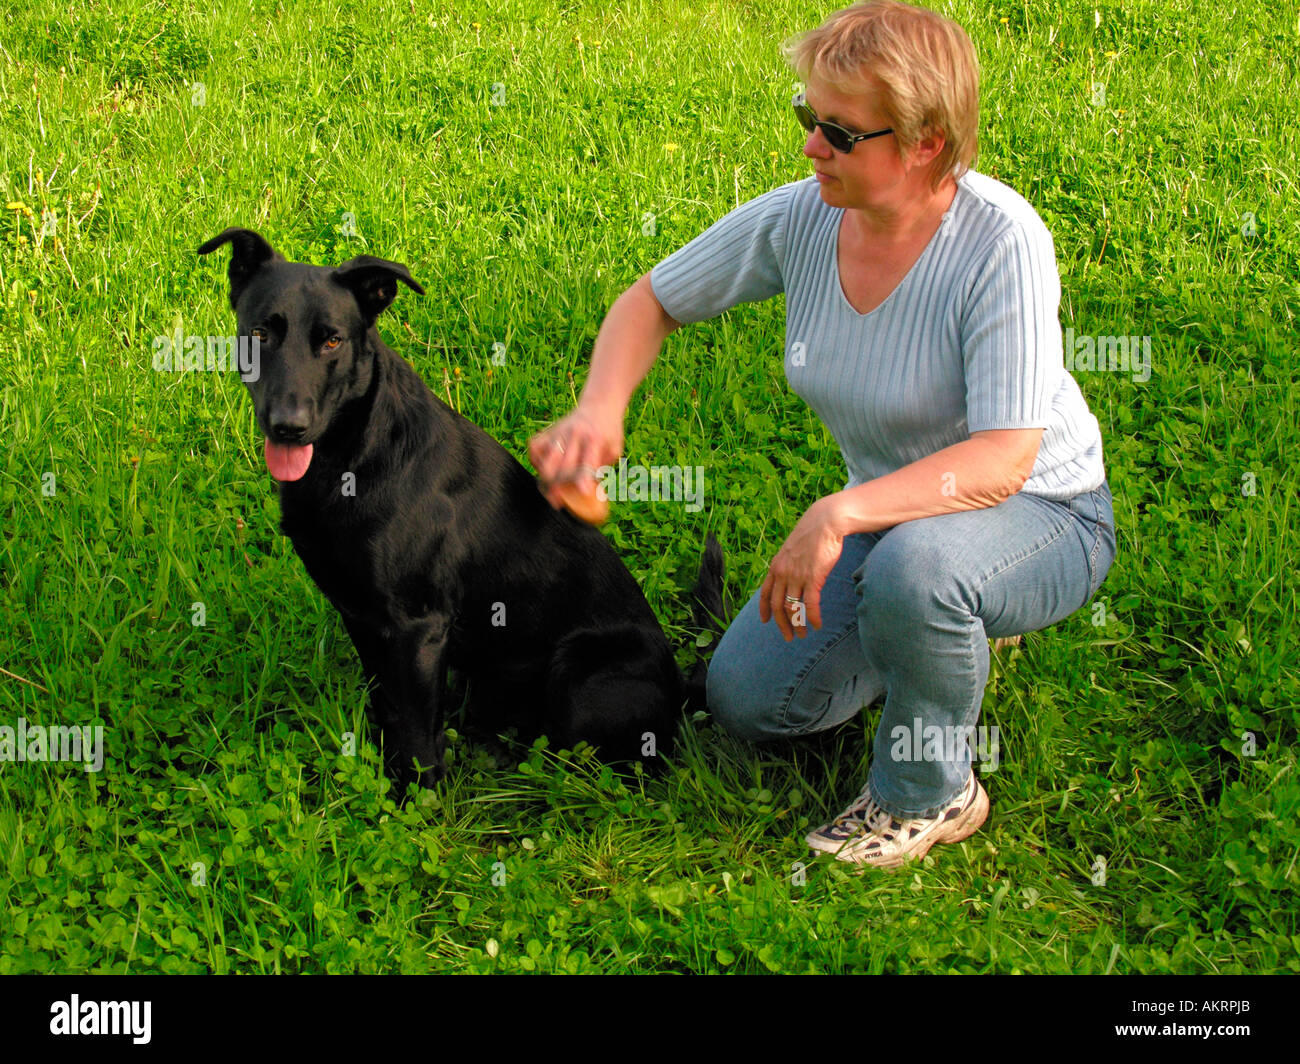 grooming a dog woman brushing a black hybrid dog Labrador Border Collie ...